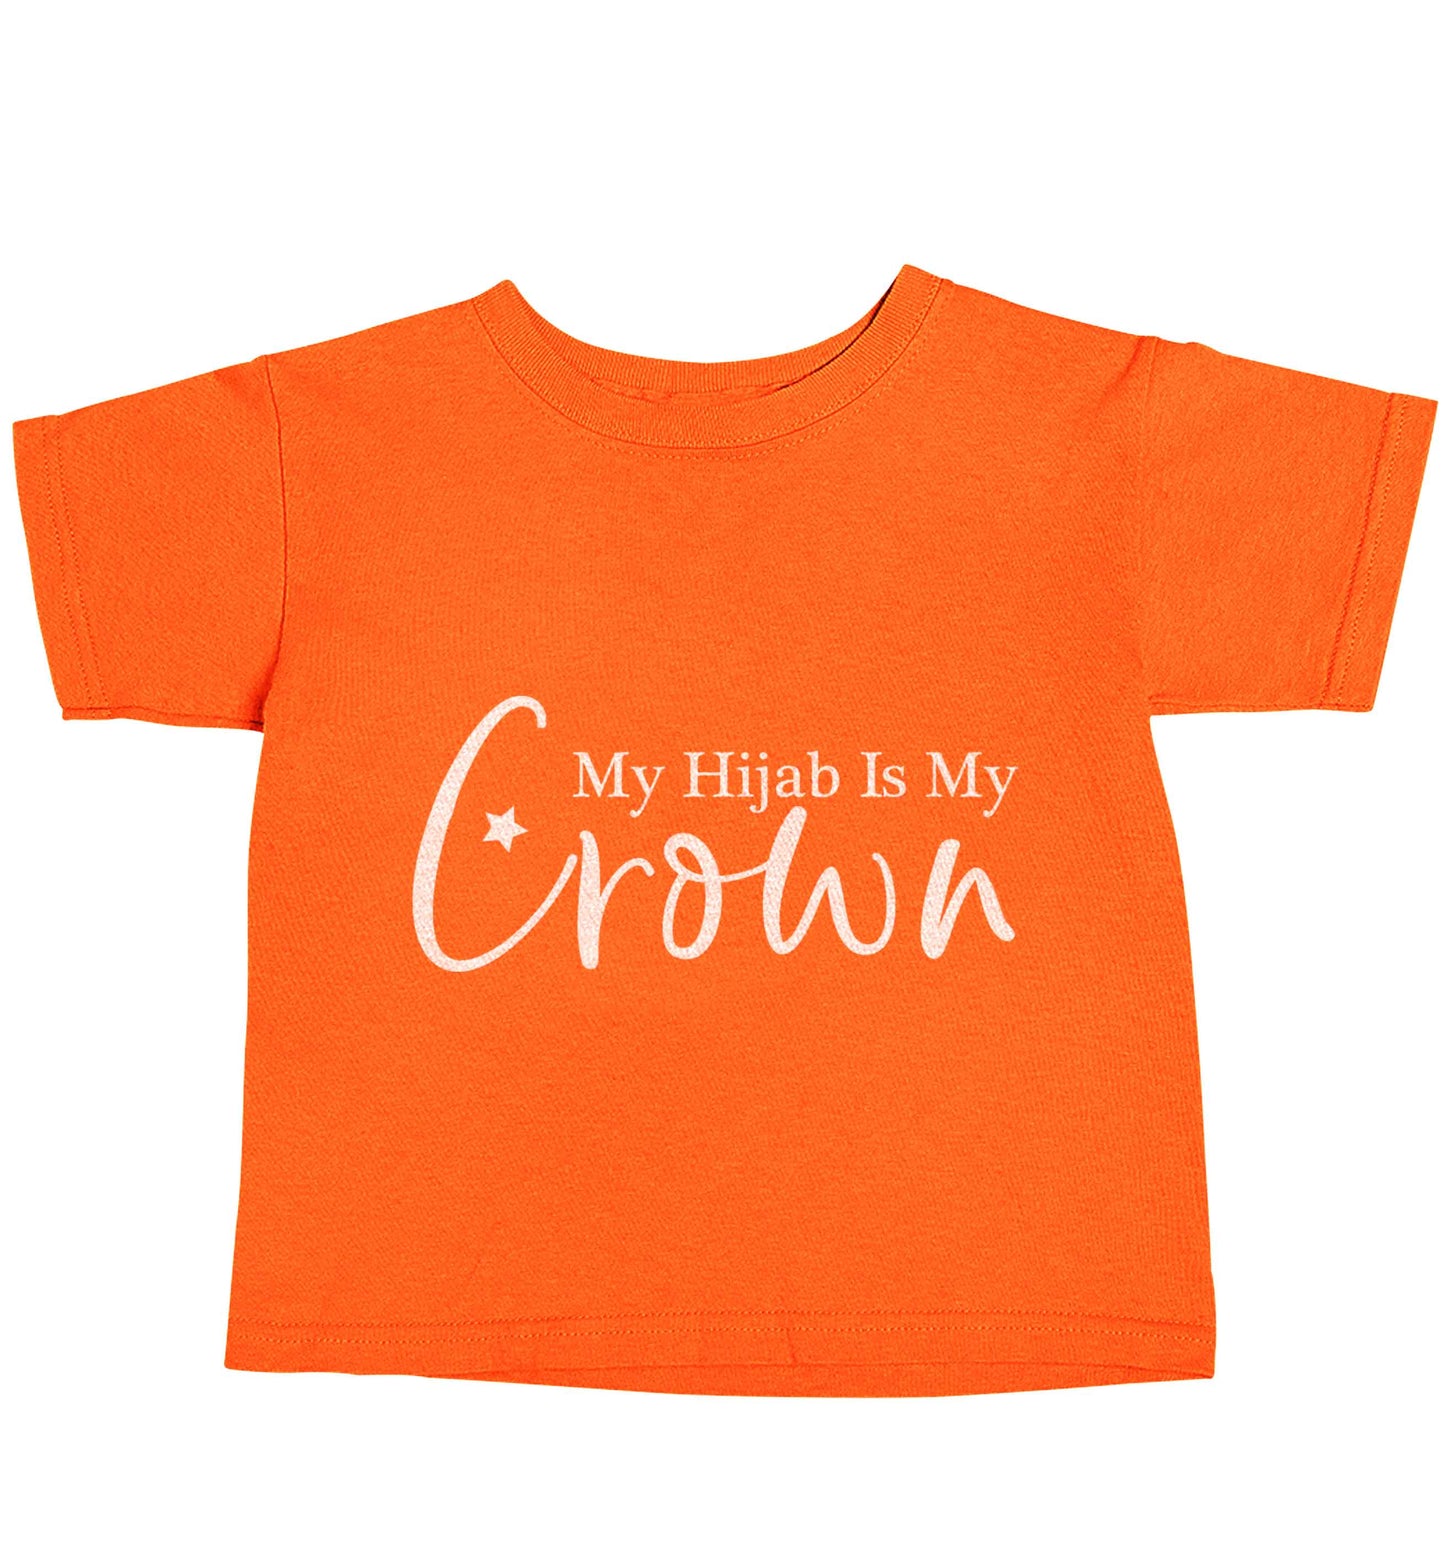 My hijab is my crown orange baby toddler Tshirt 2 Years